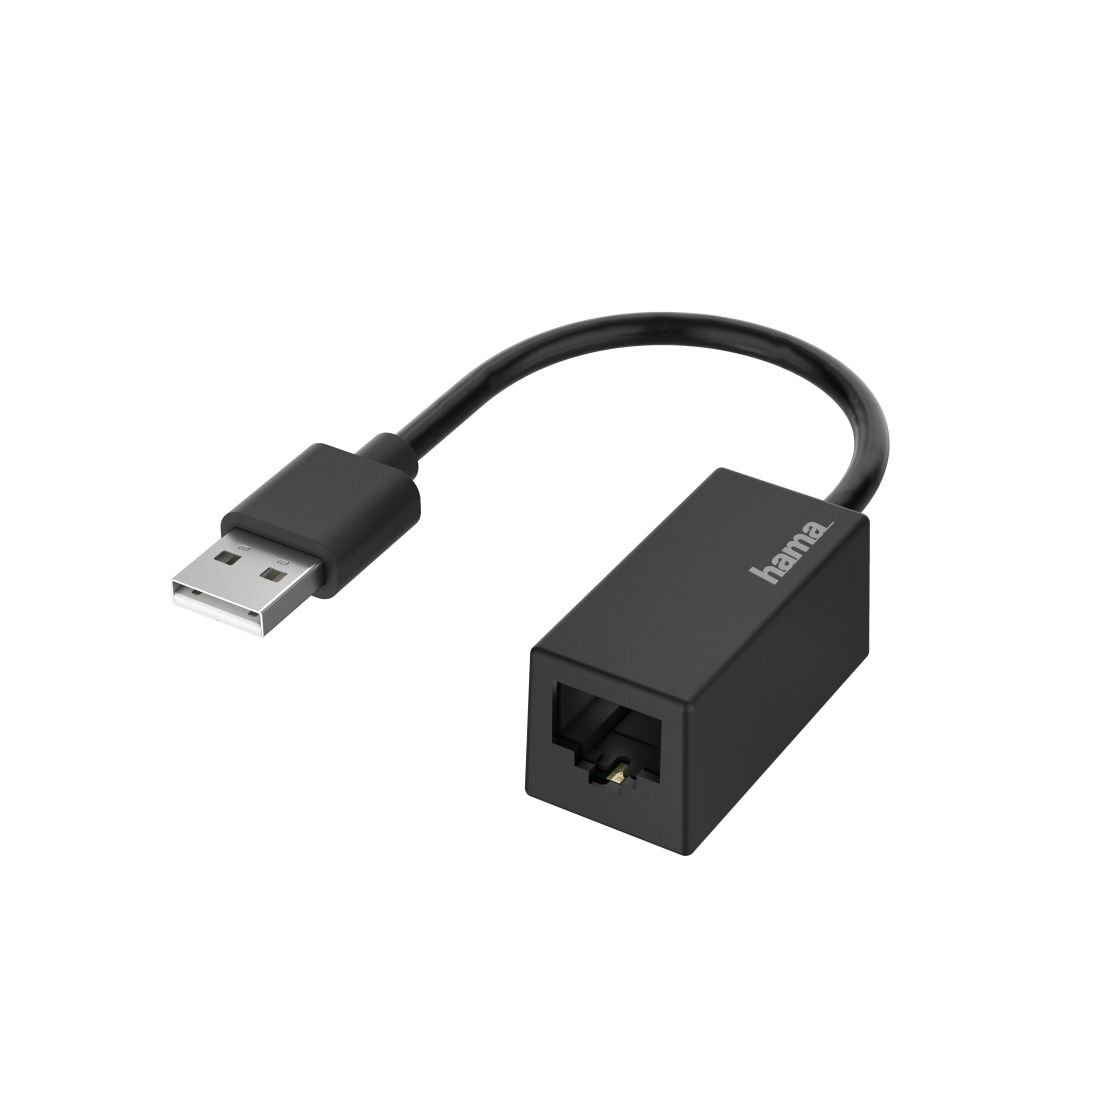 Republikeinse partij Umeki Likken Netwerk-adapter, USB-stekker - LAN/Ethernet-aansluiting, Fast-ethernet |  Multimedia Center Veenendaal